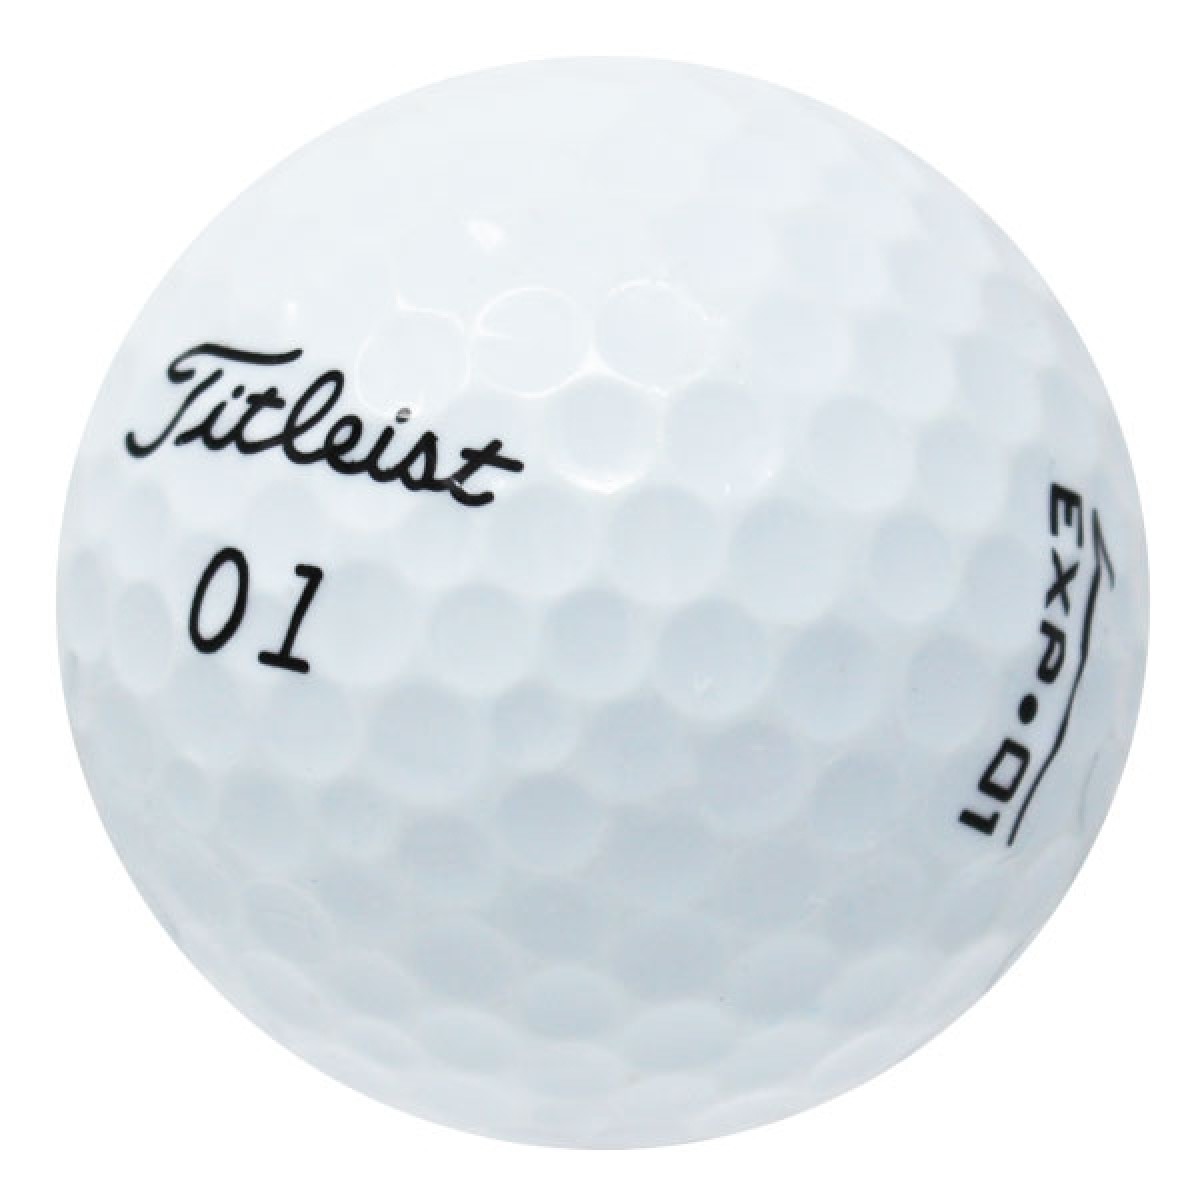 Titleist Titleist EXP 01 Used Golf Balls | Lostgolfballs.com